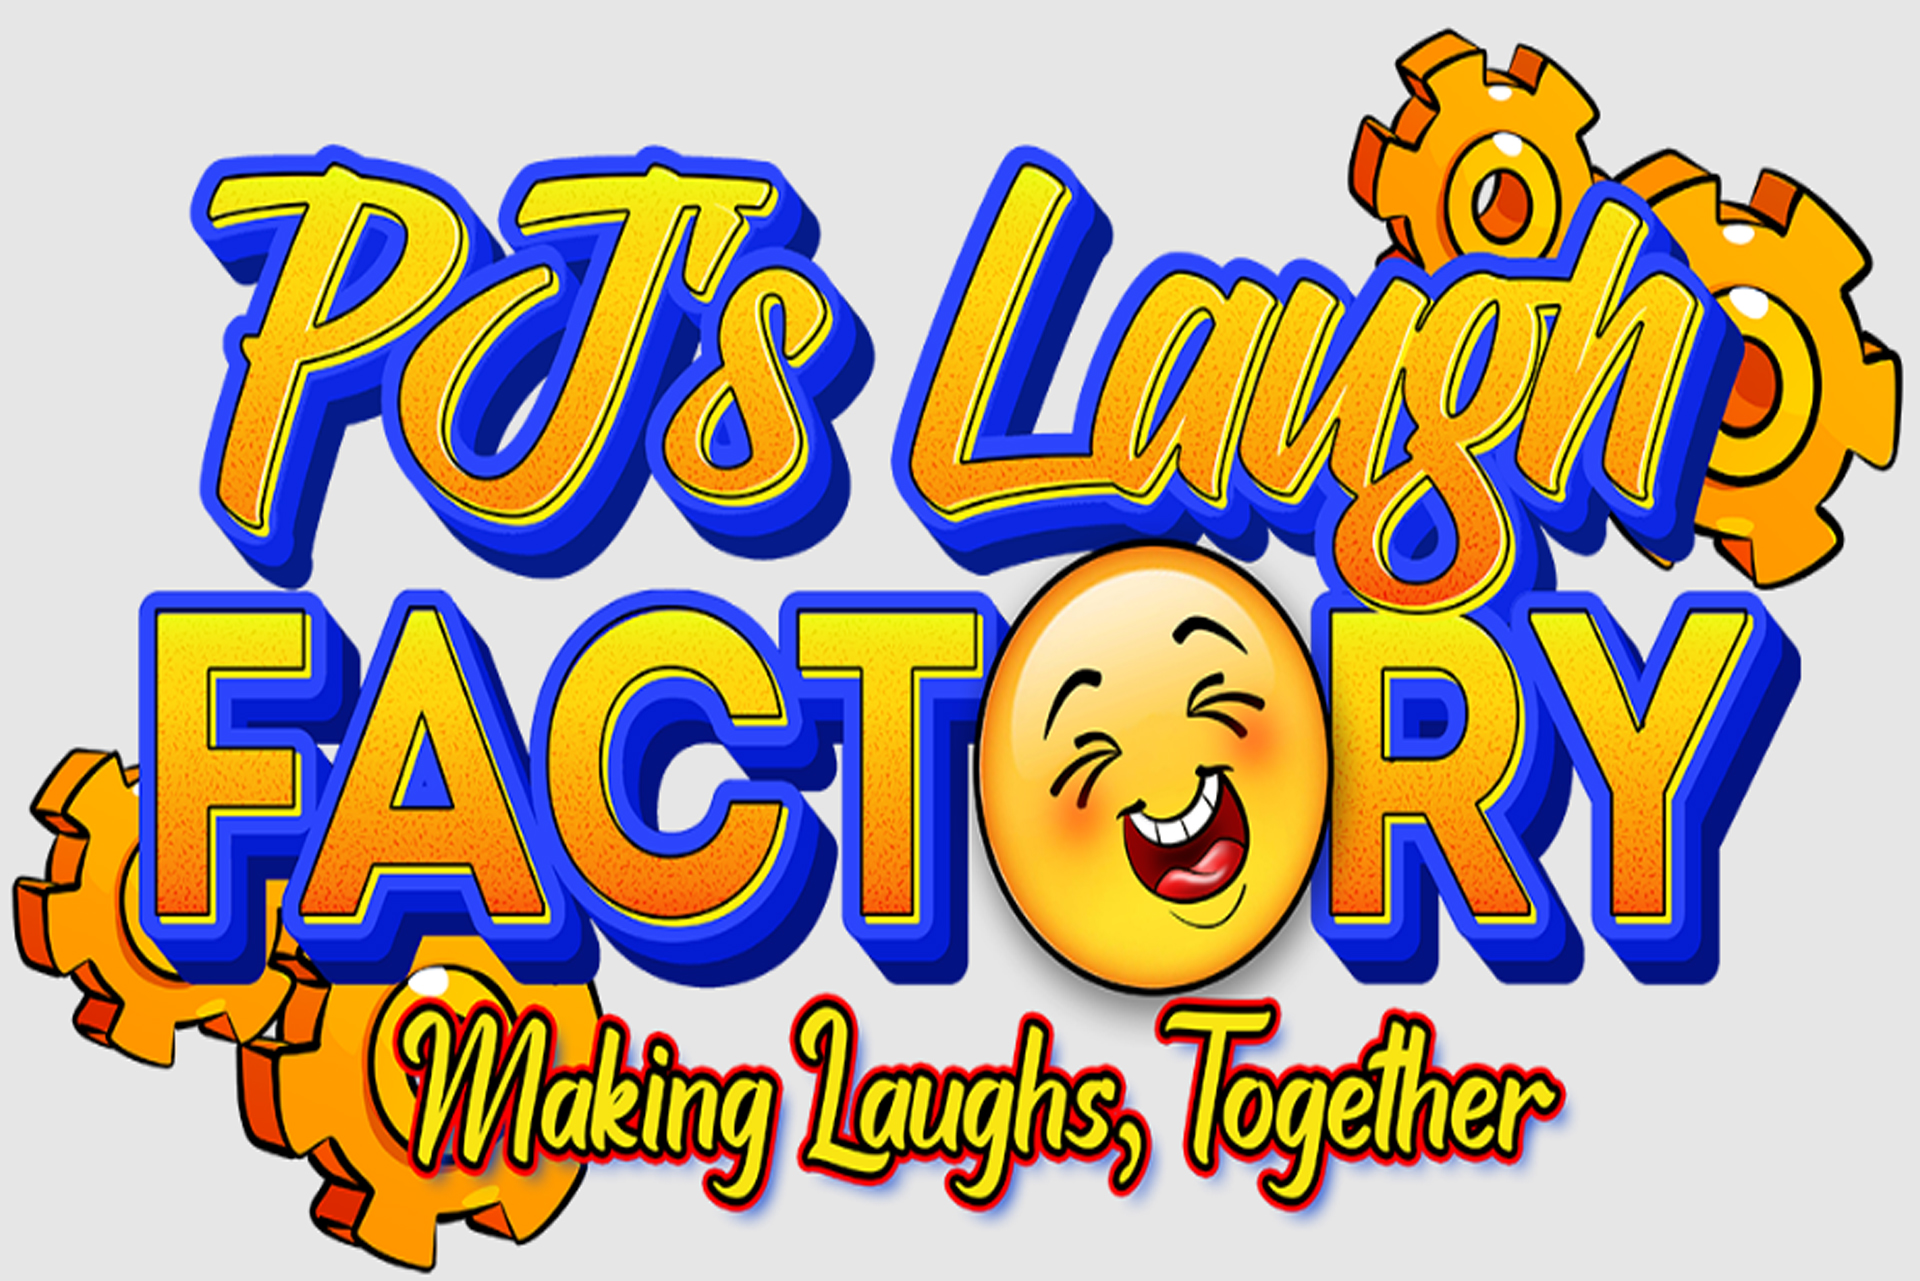 PJ's Laugh Factory logo